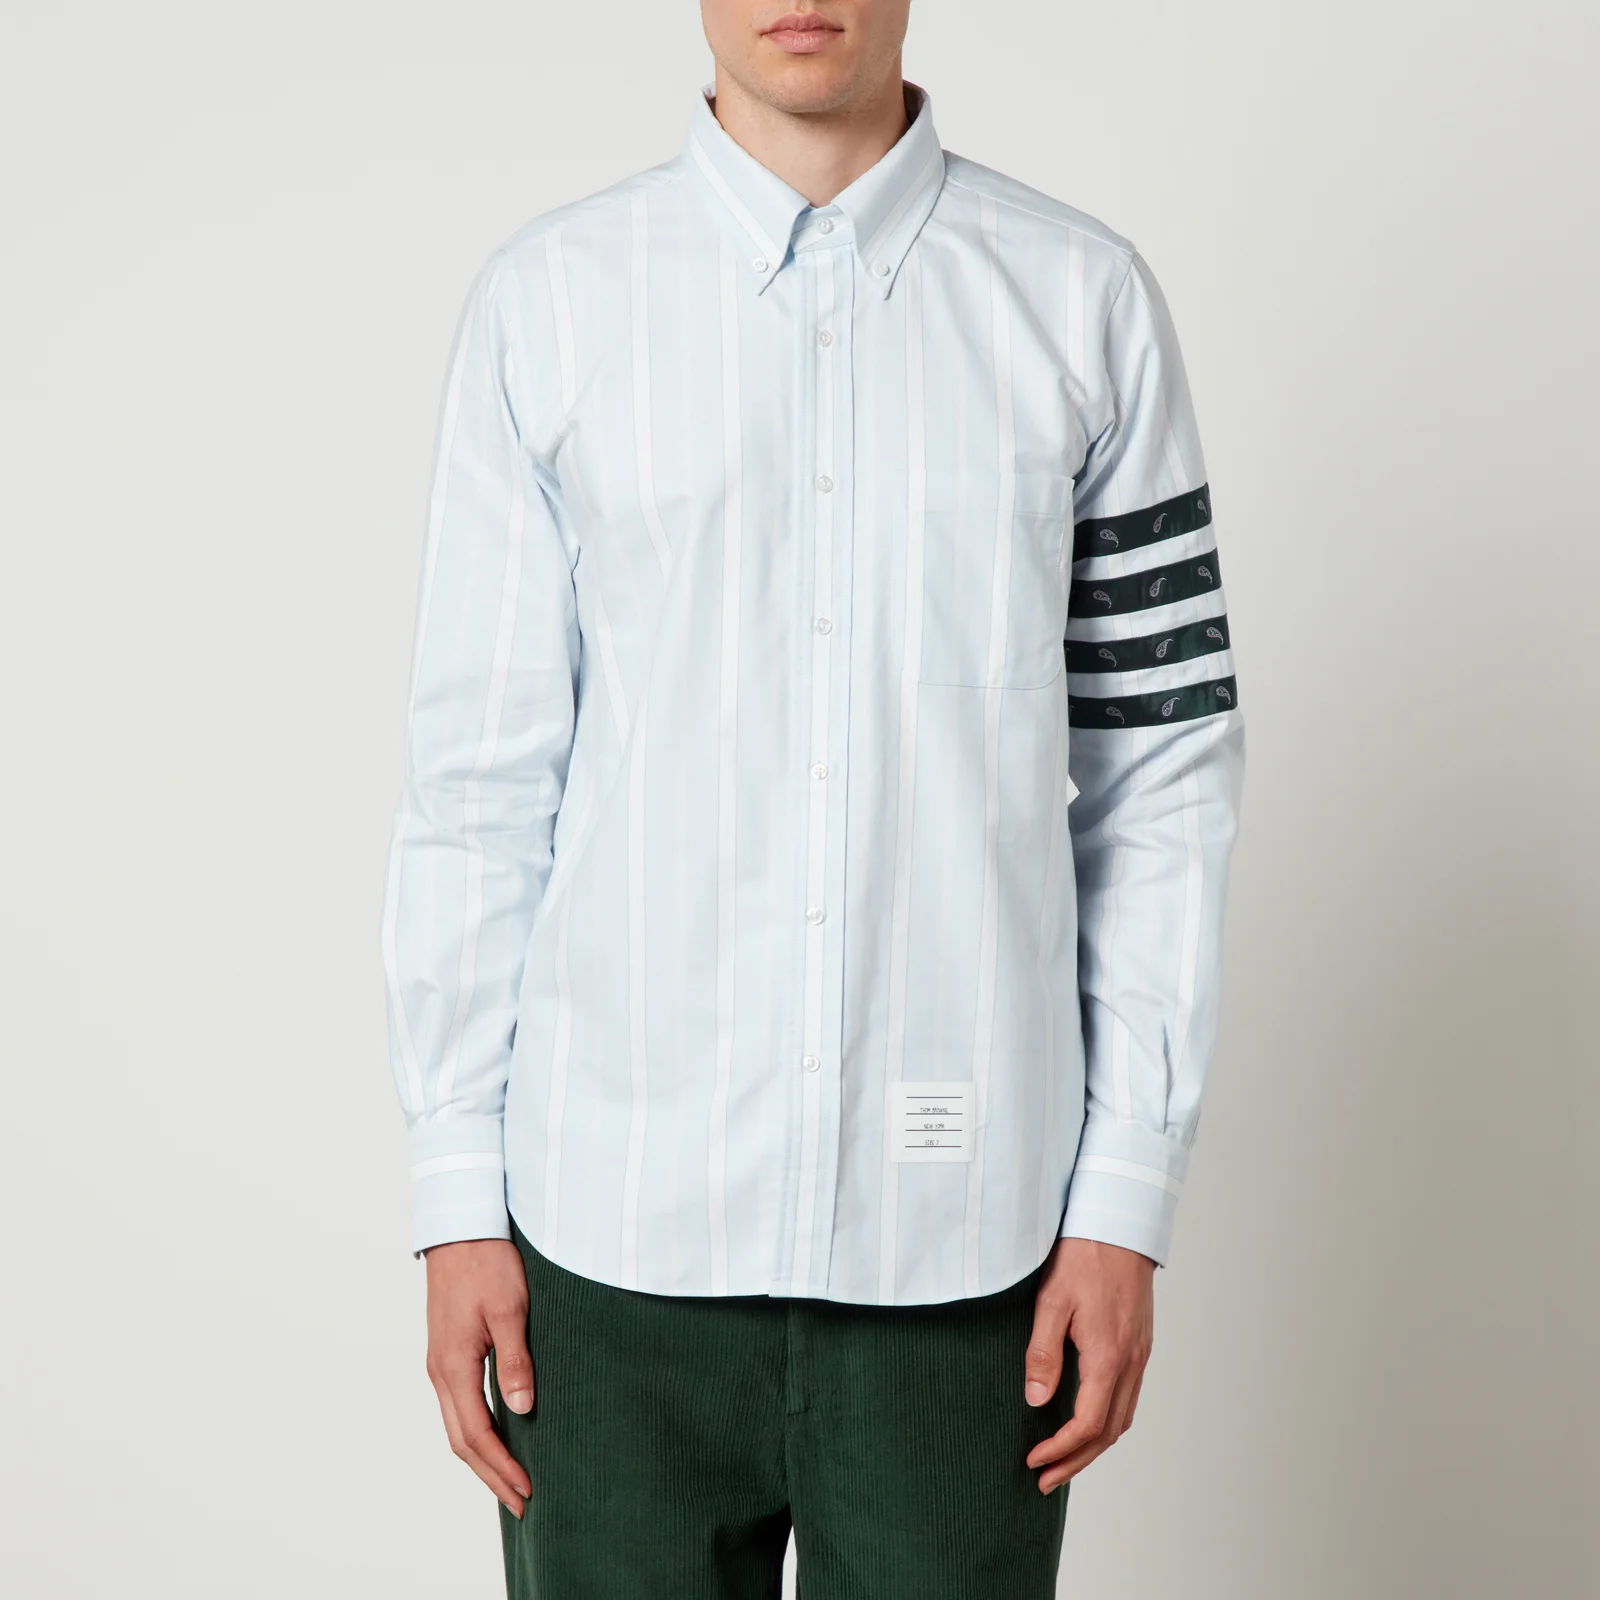 Thom Browne 4-Bar Paisley and Striped Silk Shirt Image 1